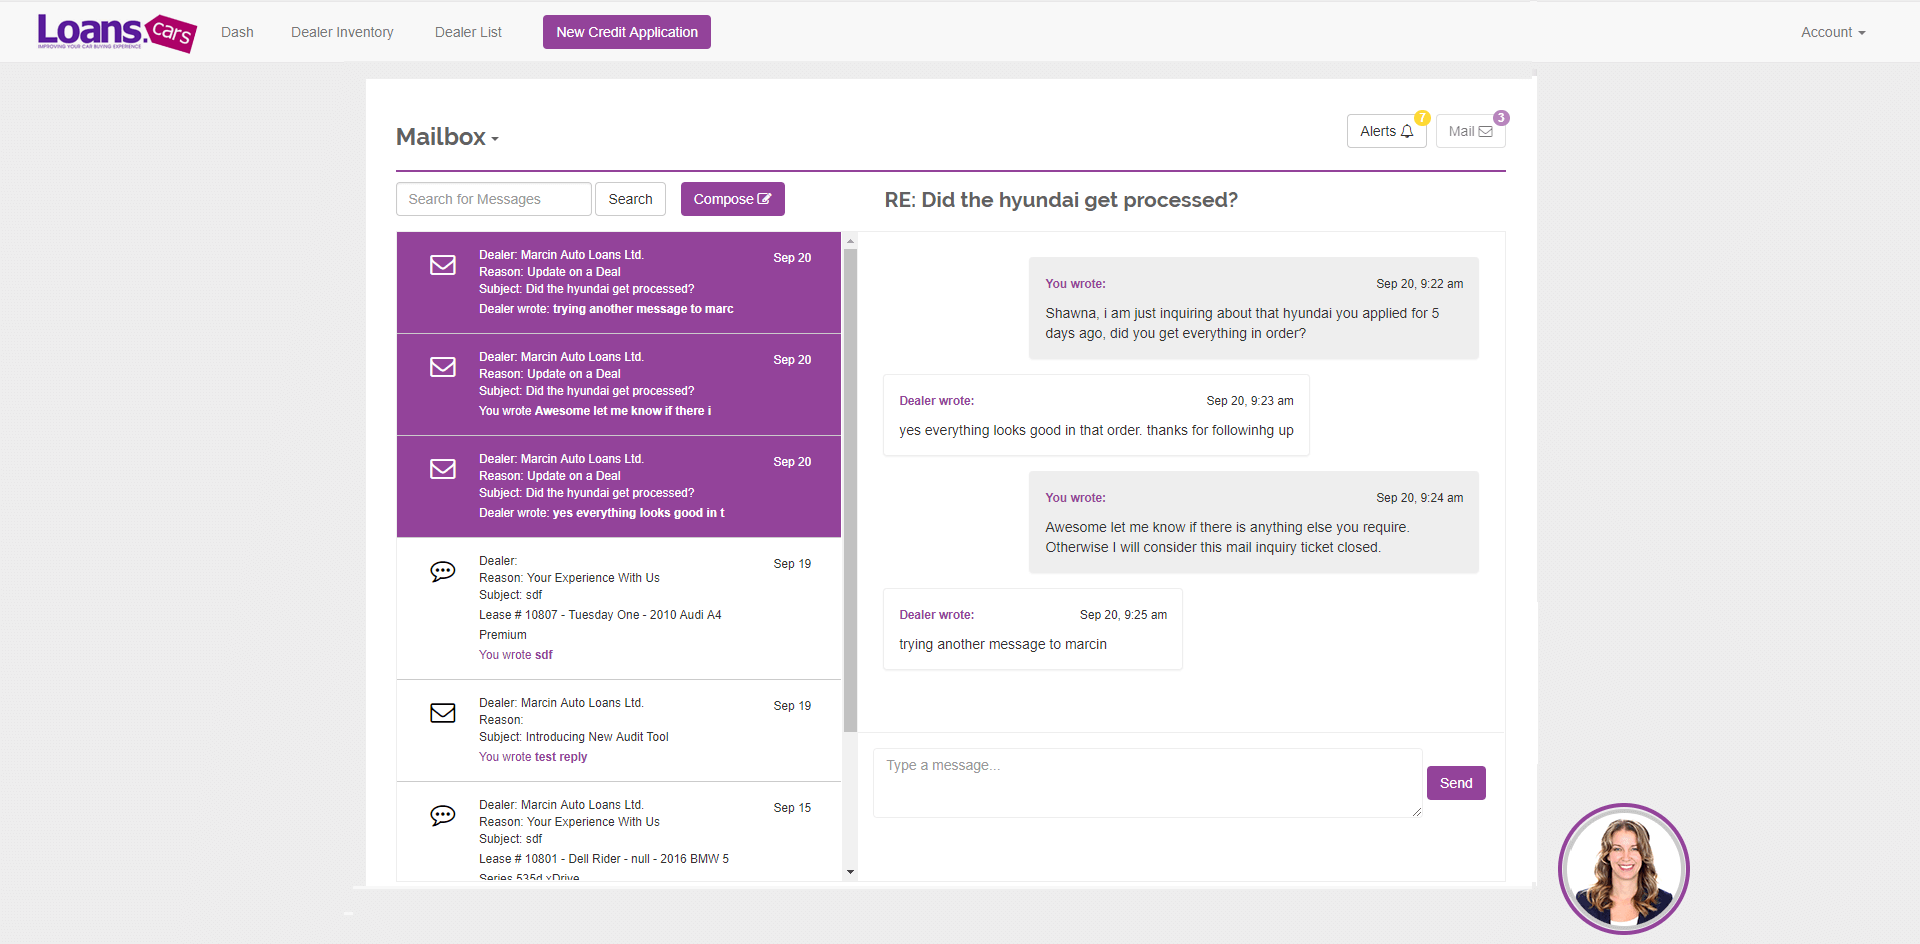 Administrator Main - Dashboard - Mailbox - conversation with dealer